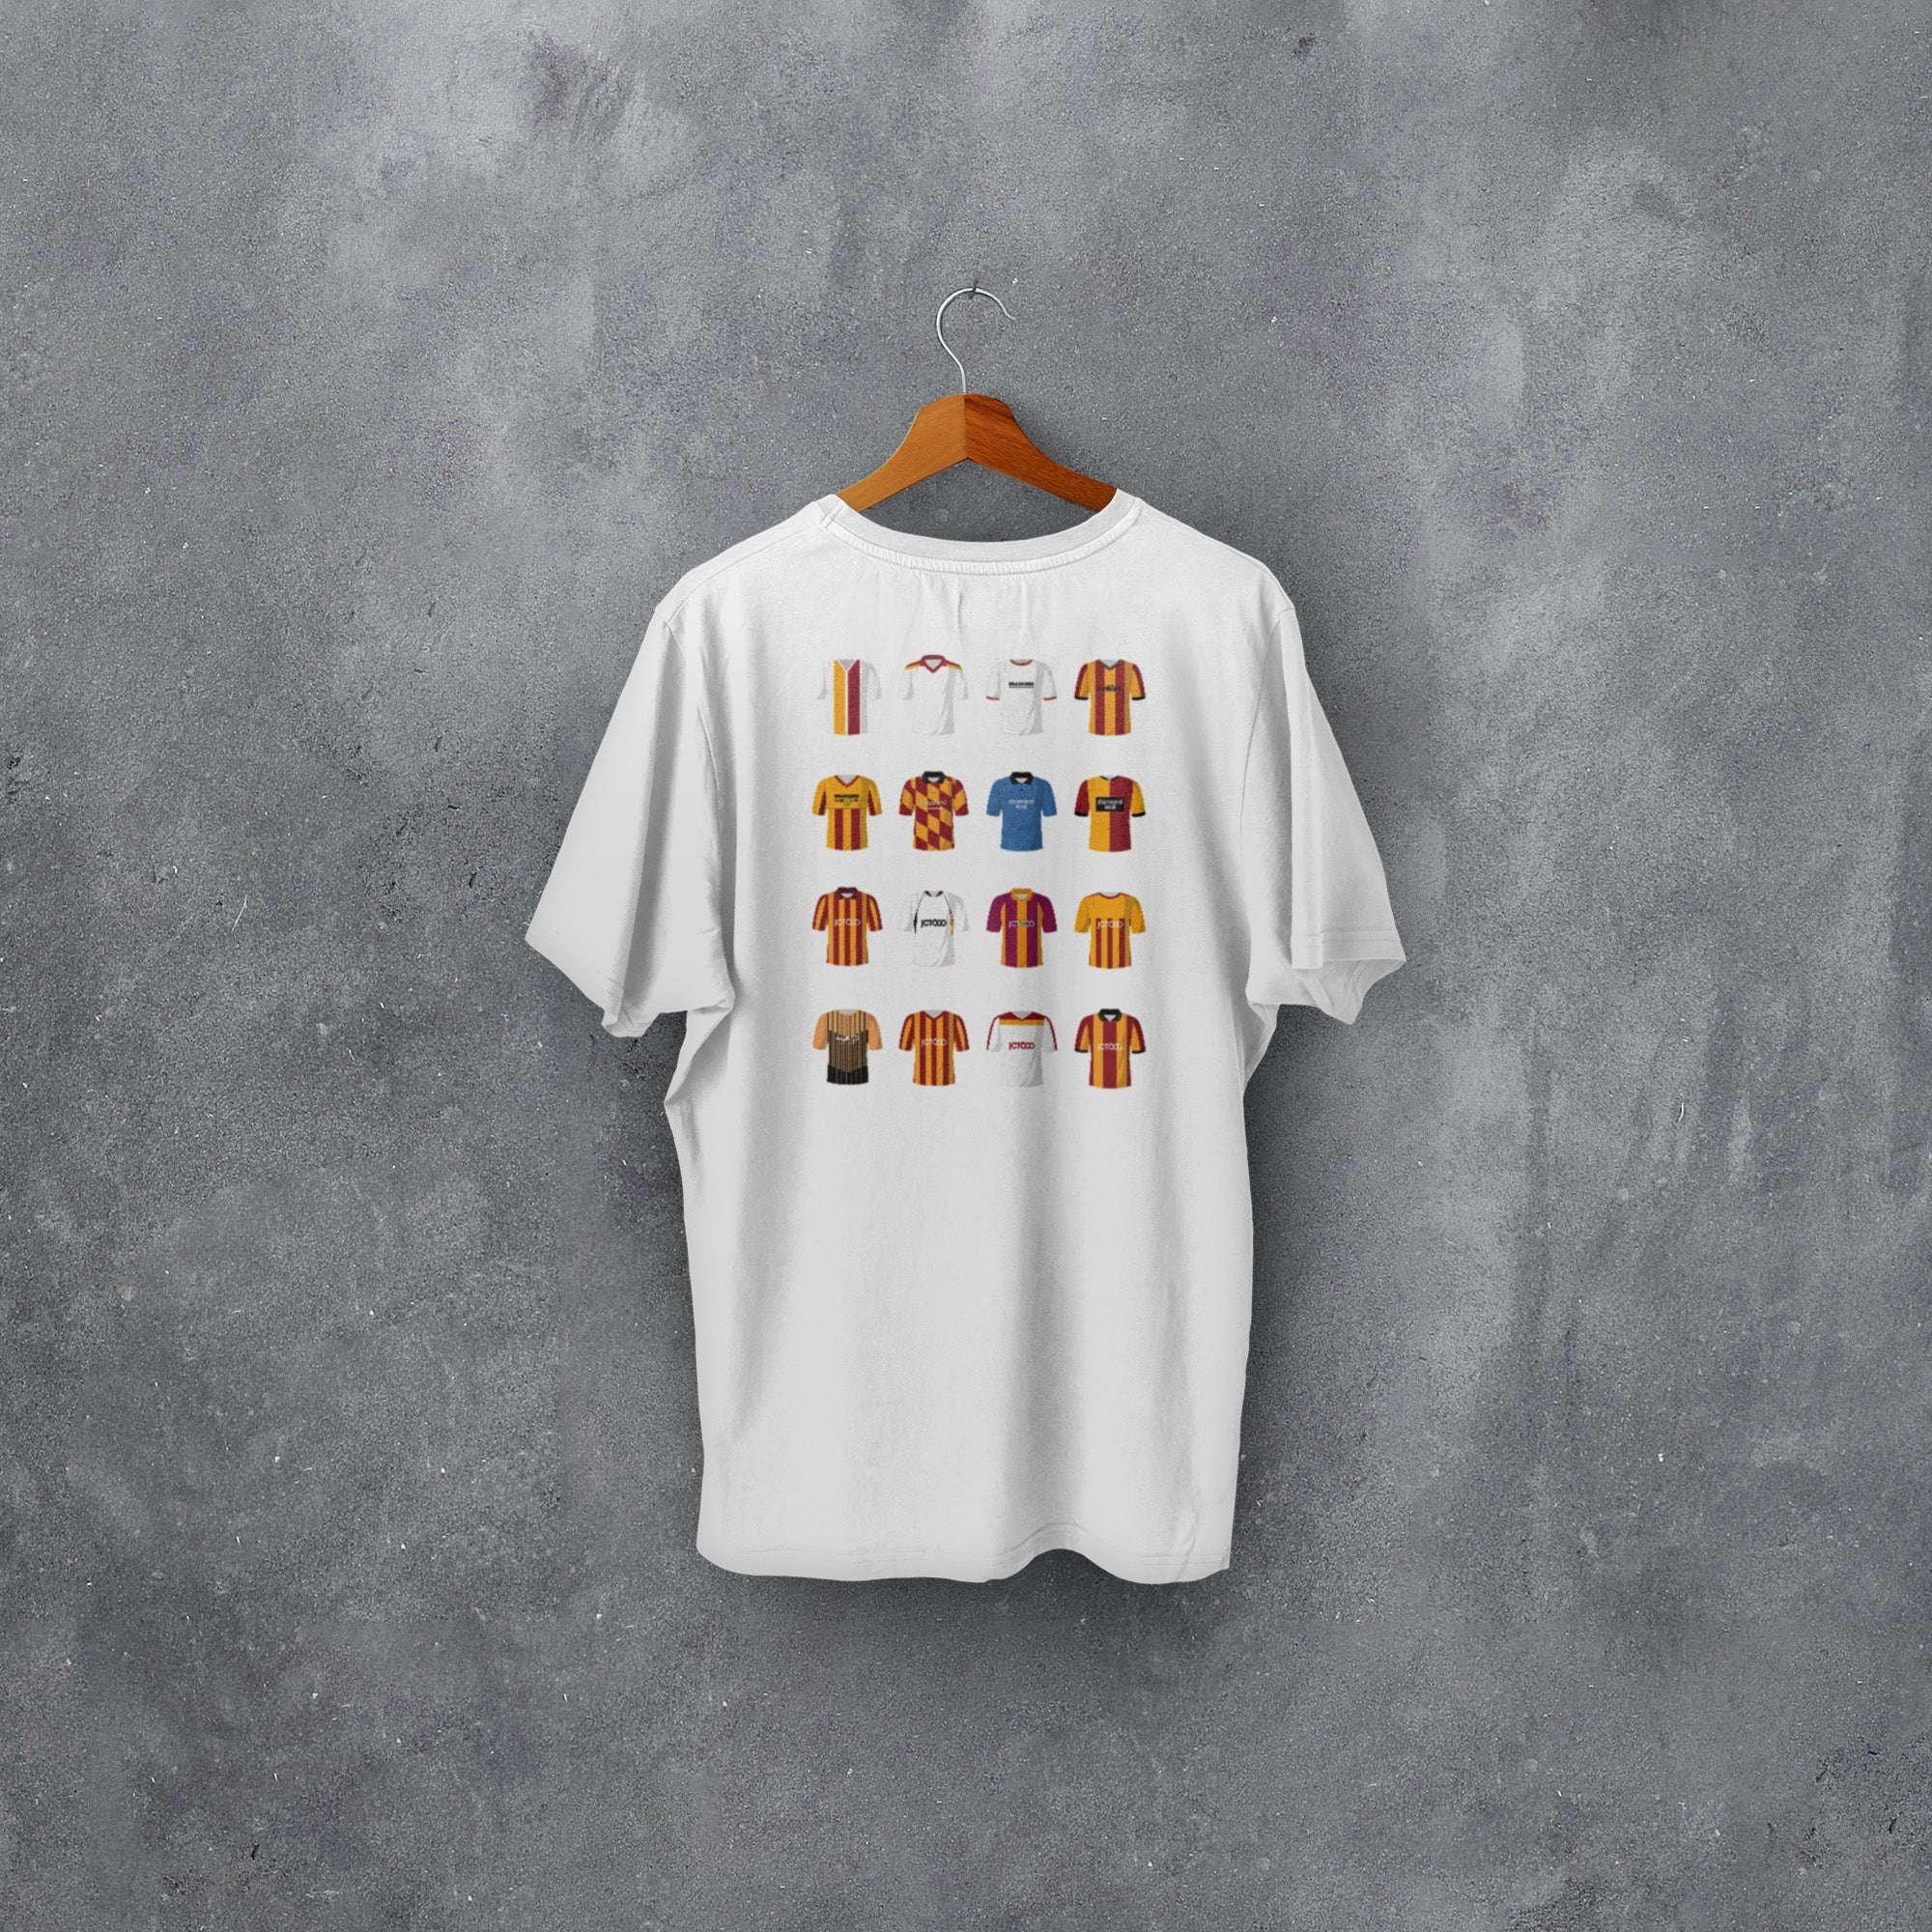 Bradford Classic Kits Football T-Shirt